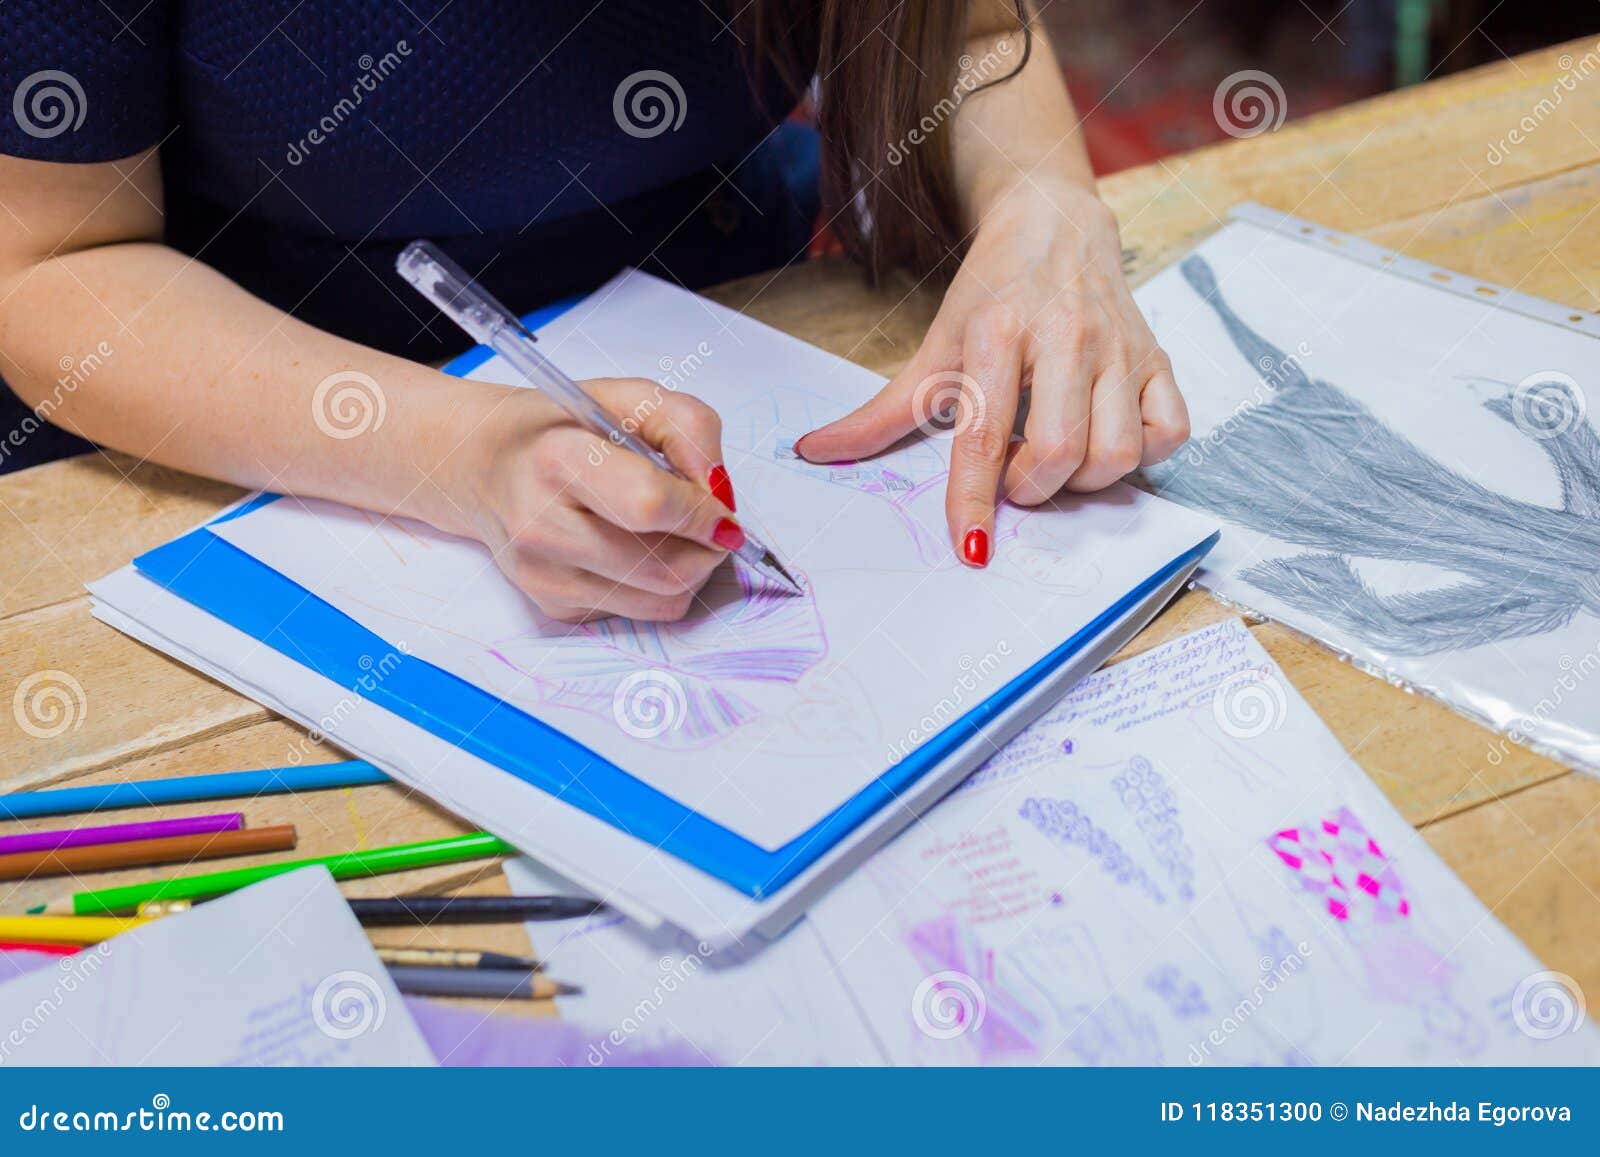 Fashion Designer Drawing Design Sketch Stock Photo - Image of hand ...